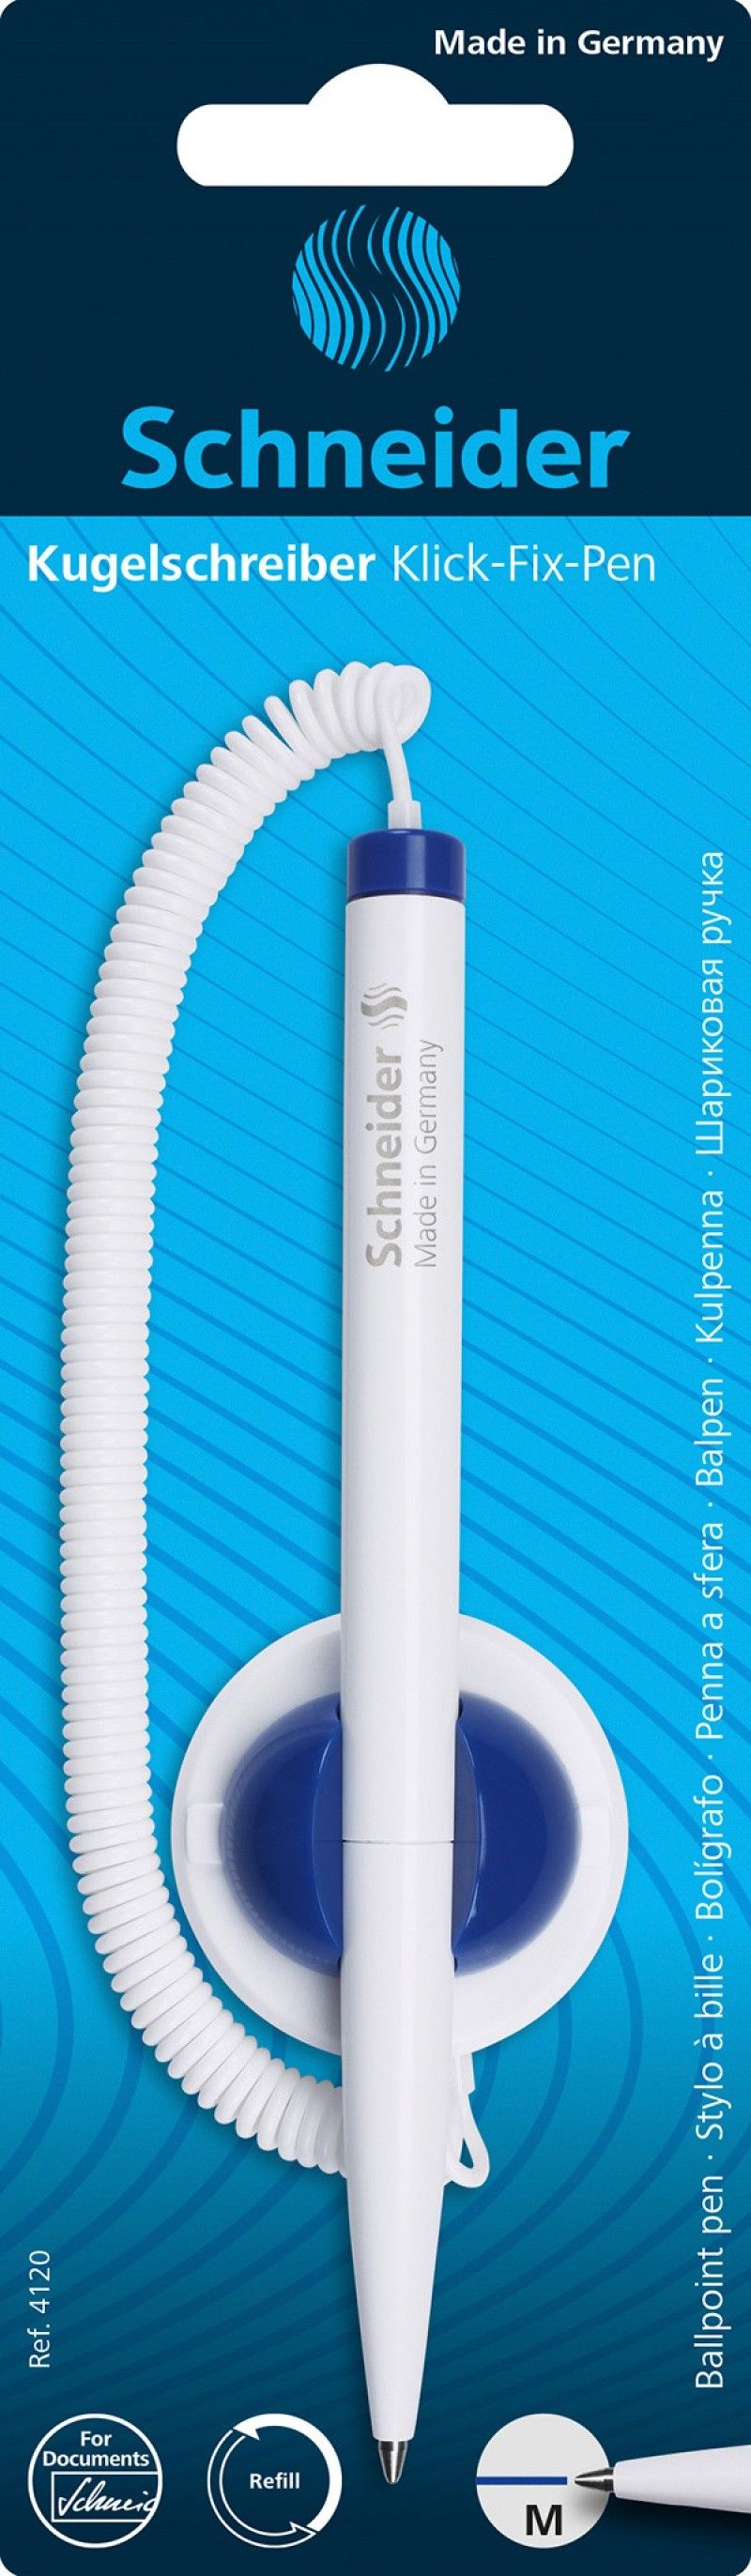 Pix Schneider Klick-Fix-Pen SCHNEIDER, cu arc, autoadeziv, M, blister, alb/albastru